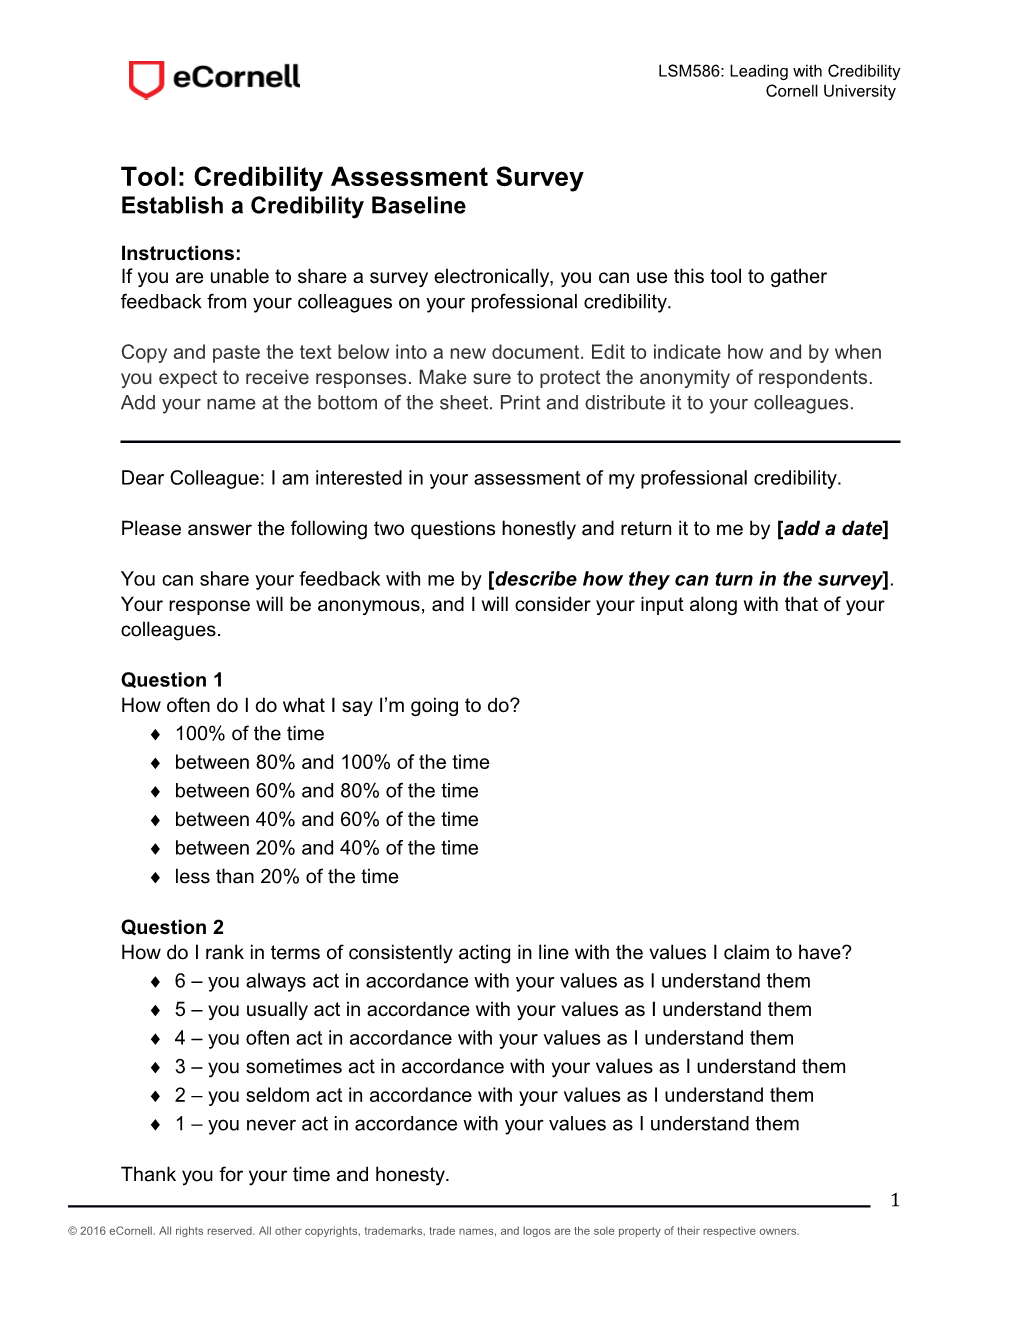 Tool: Credibility Assessment Survey